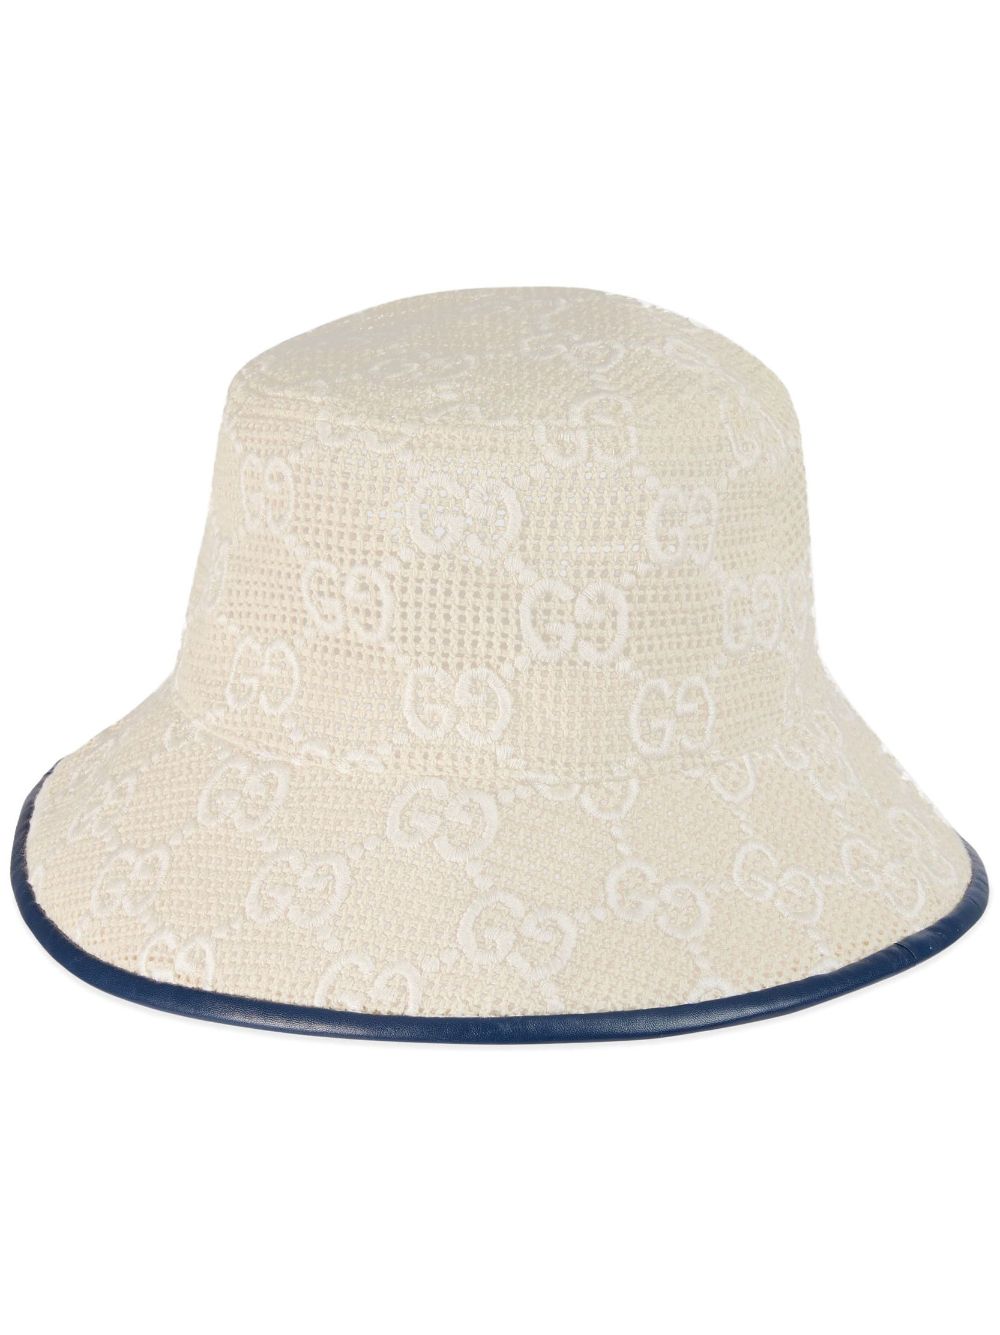 Gucci Monogram Canvas Bucket Hat